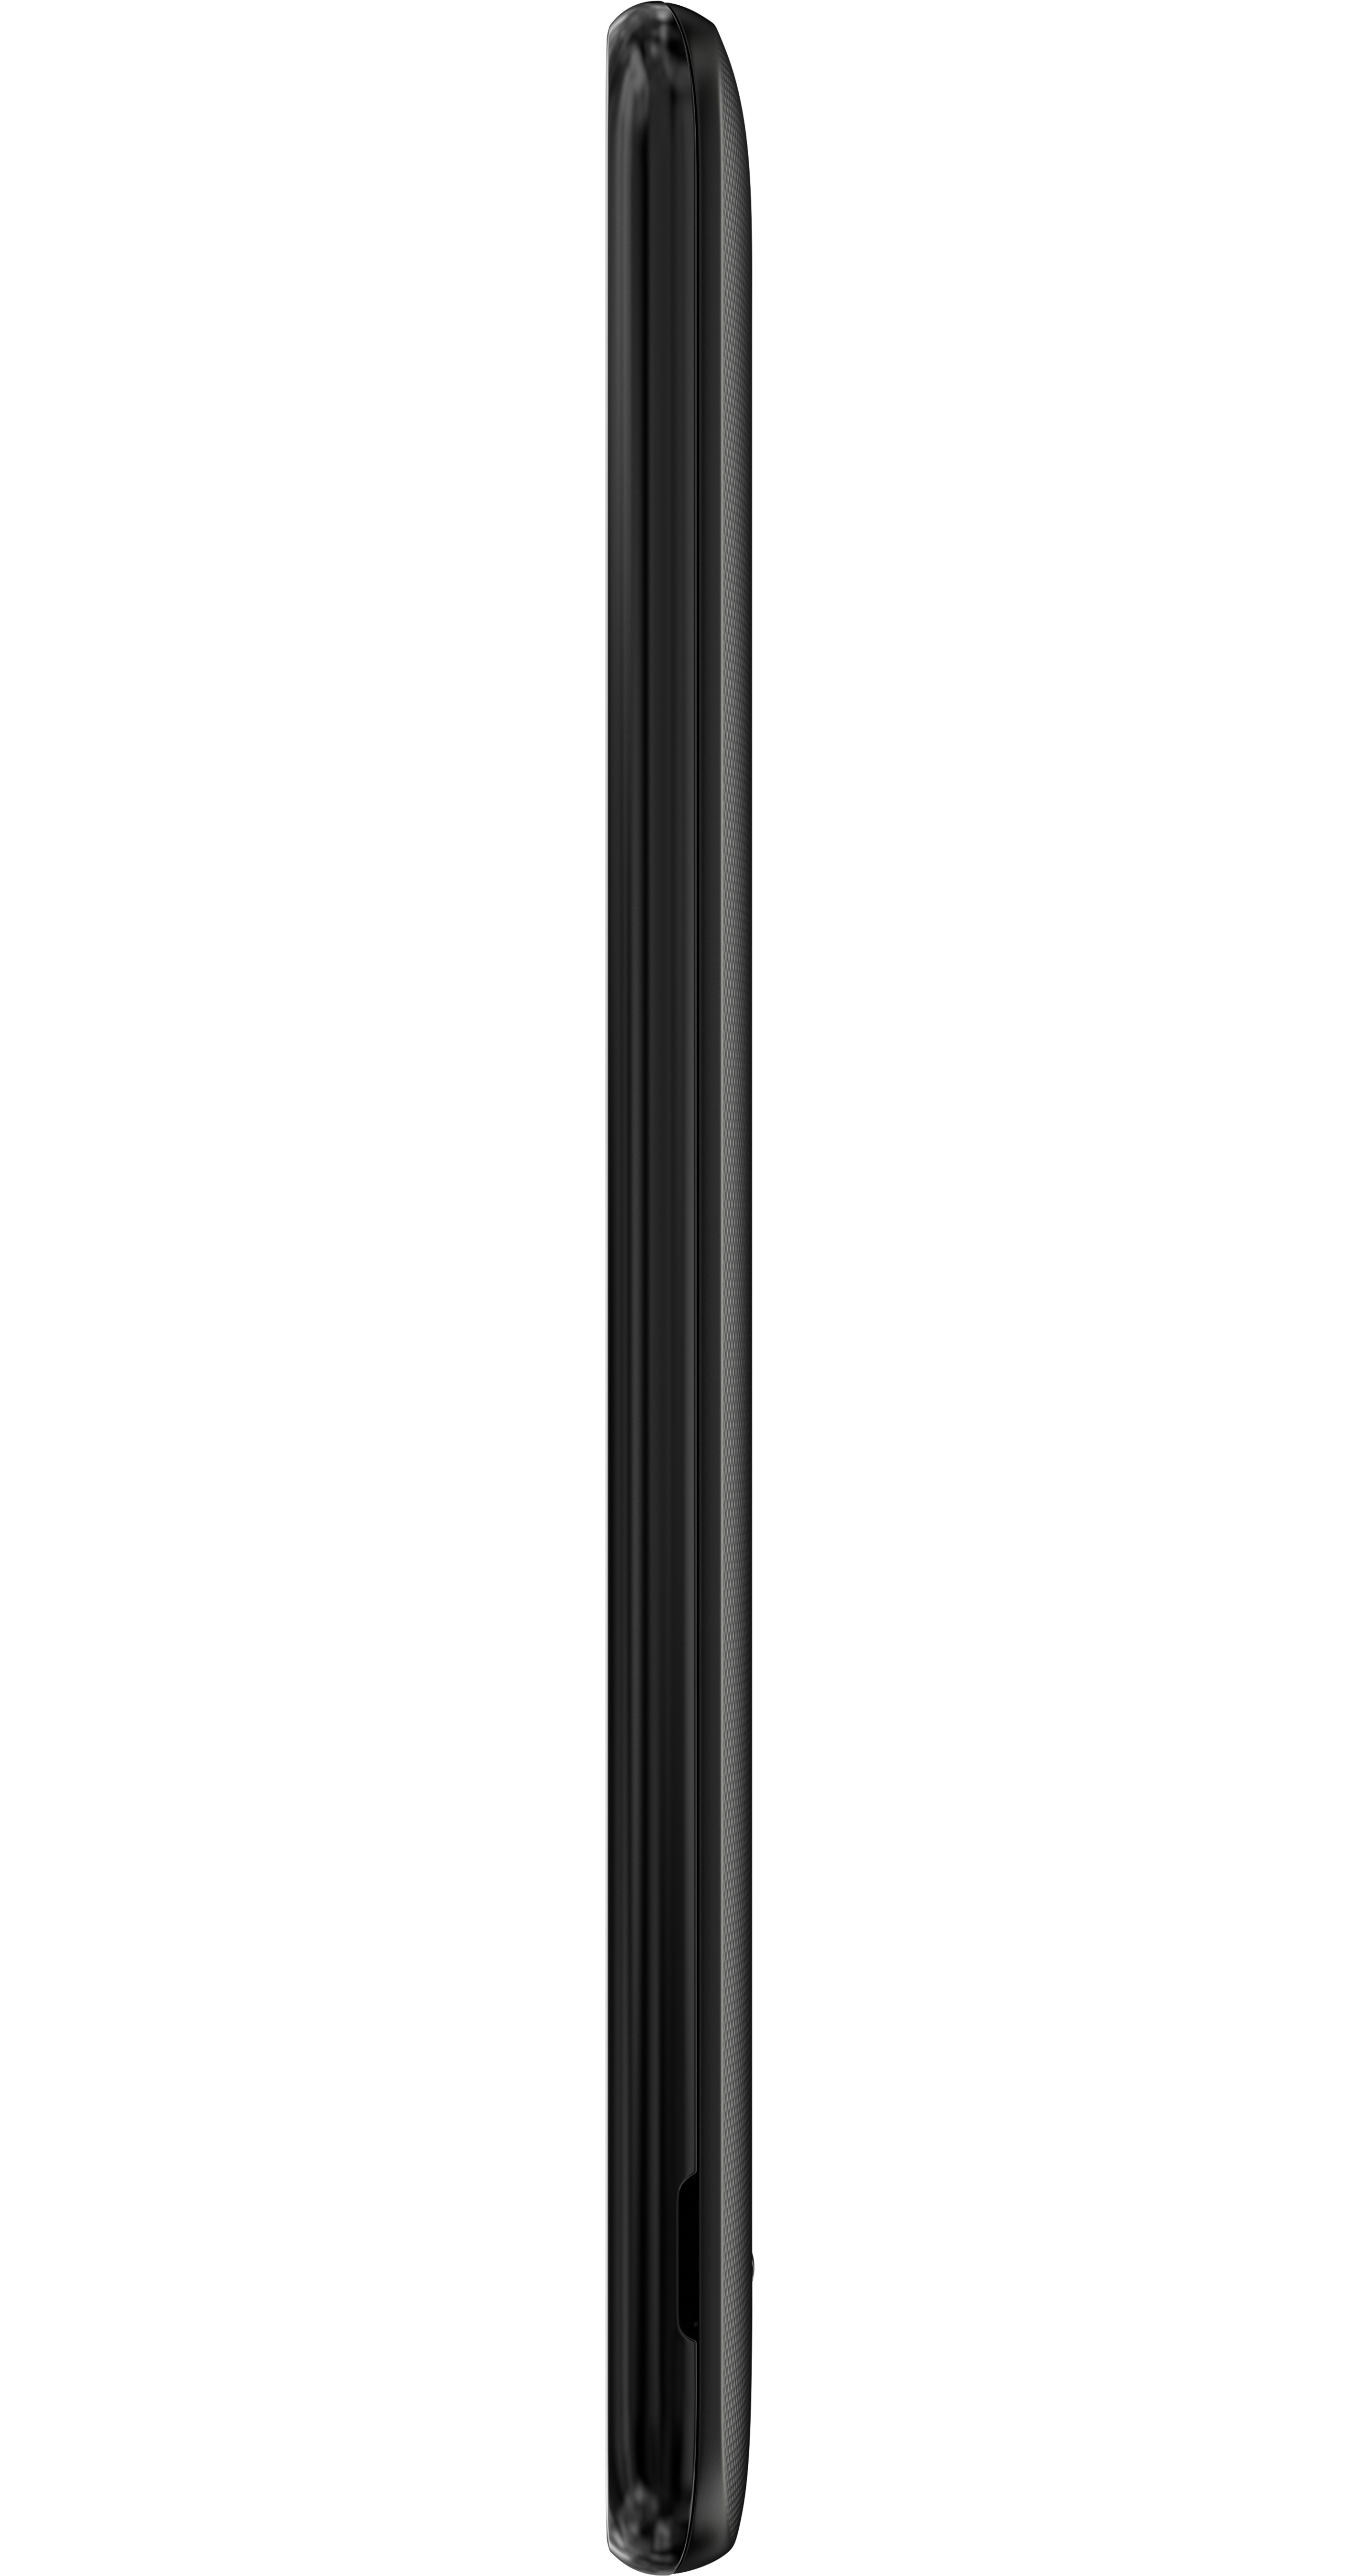 AT&T Prepaid LG Phoenix 4 16GB Prepaid Smartphone, Black - image 2 of 12